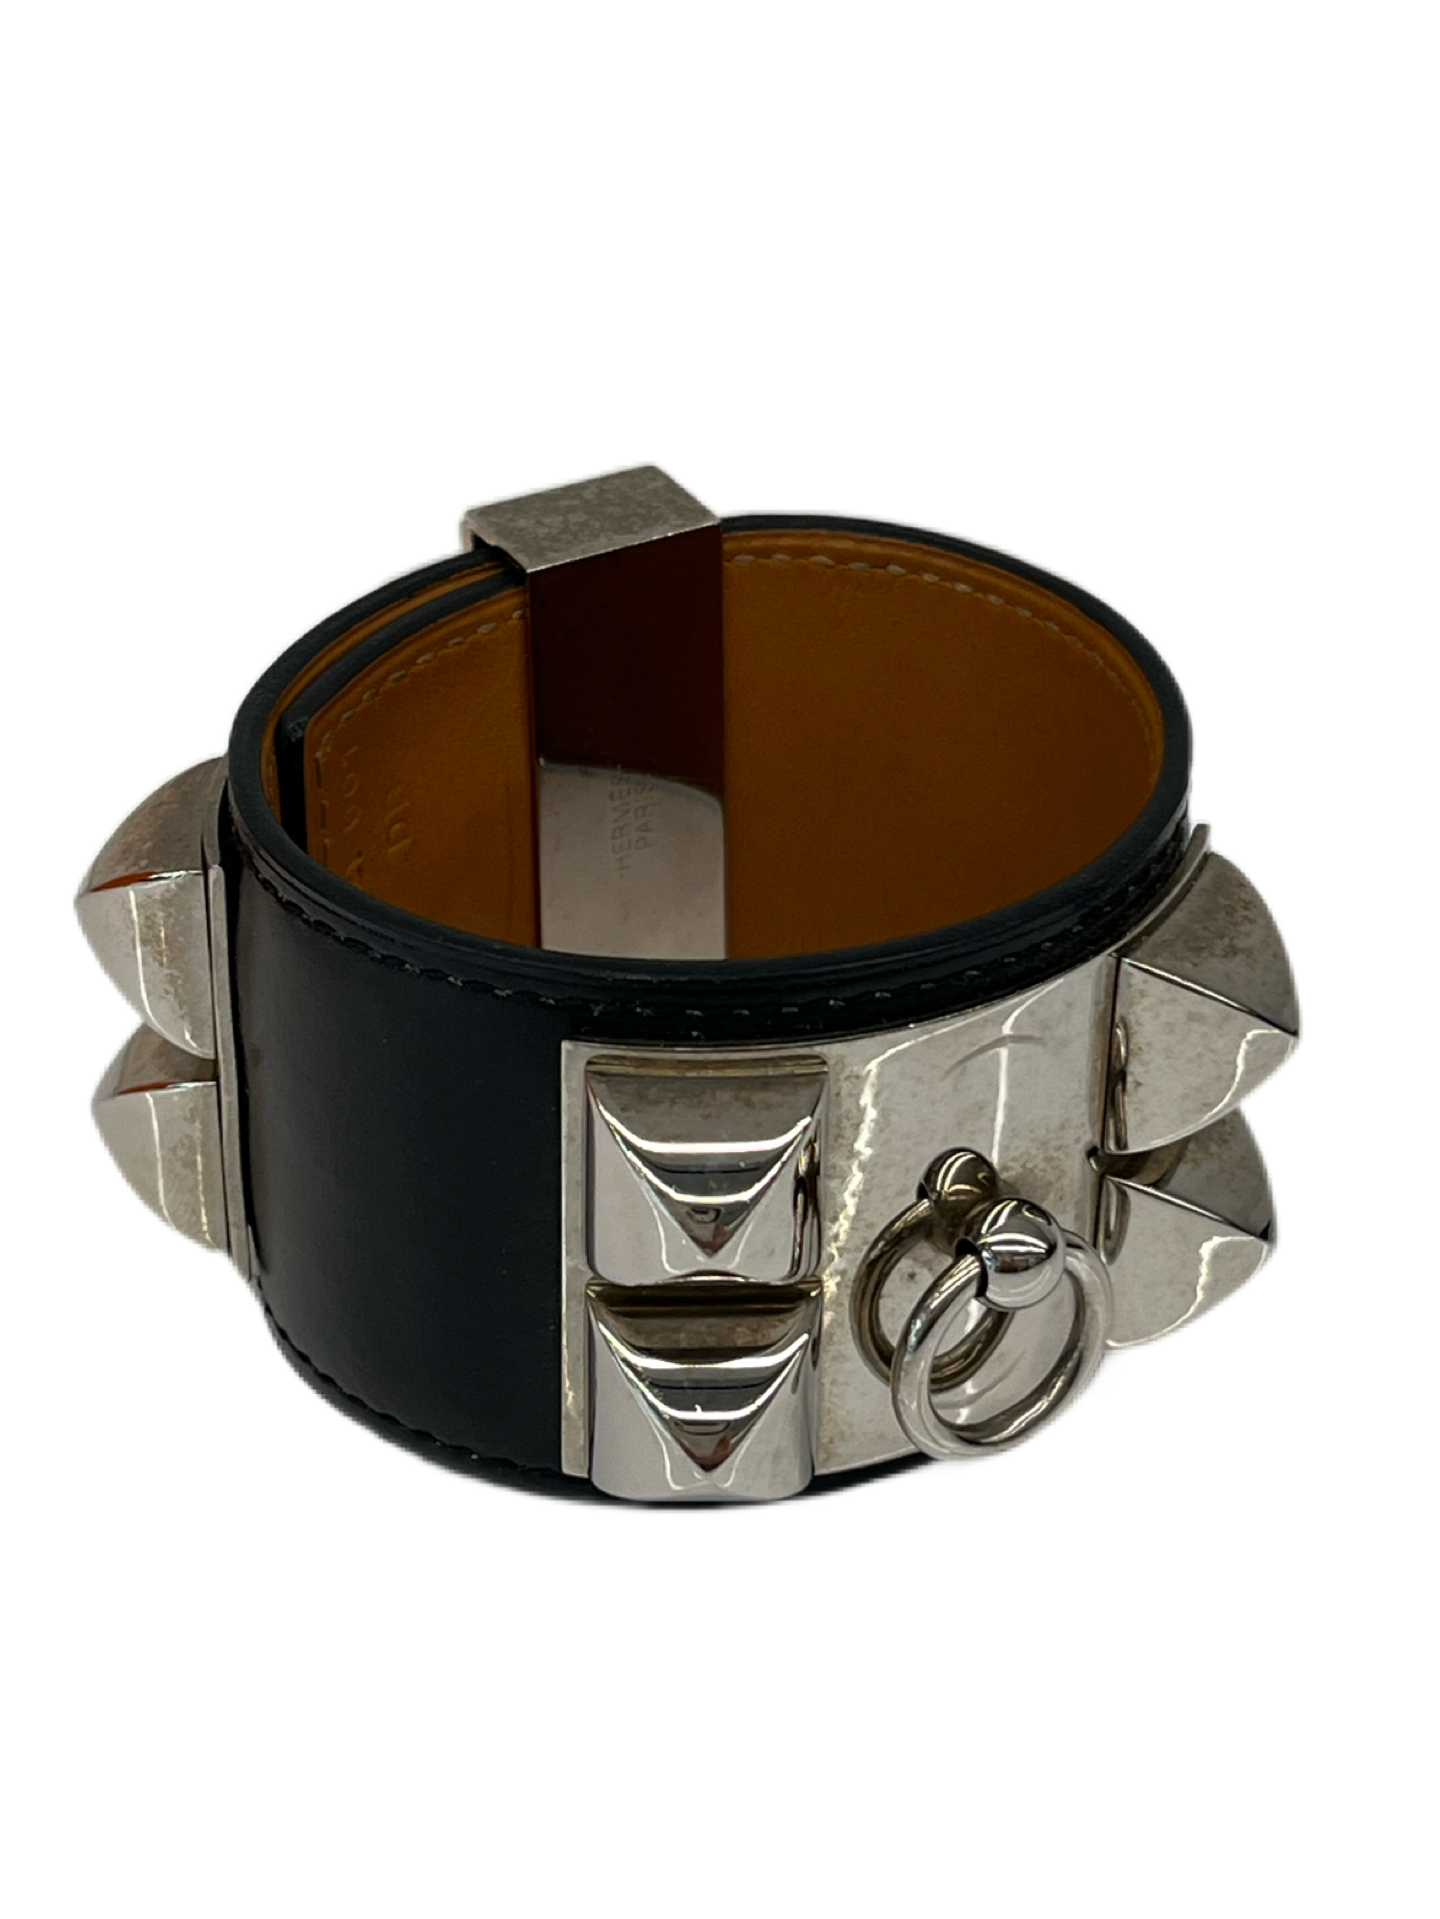 Hermes Collier de Chien Bracelet in Black Leather